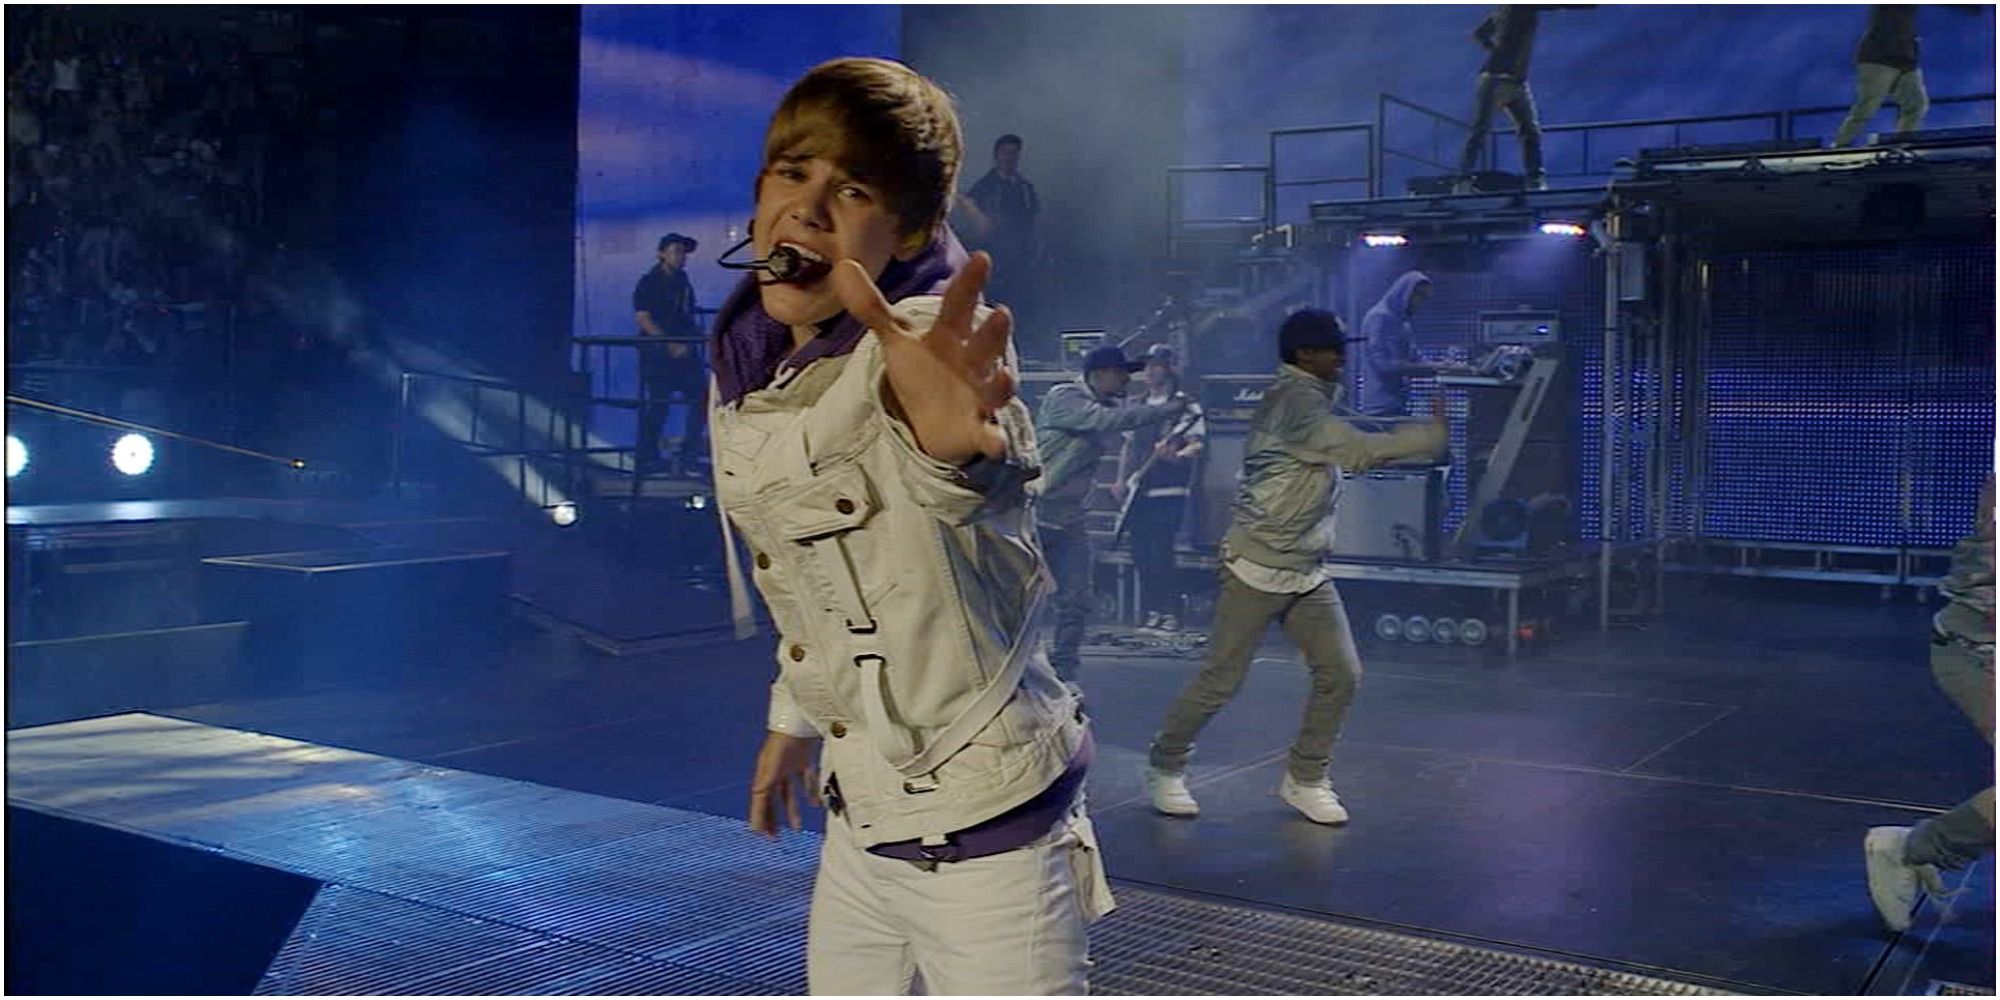 Justin Bieber singing in a concert